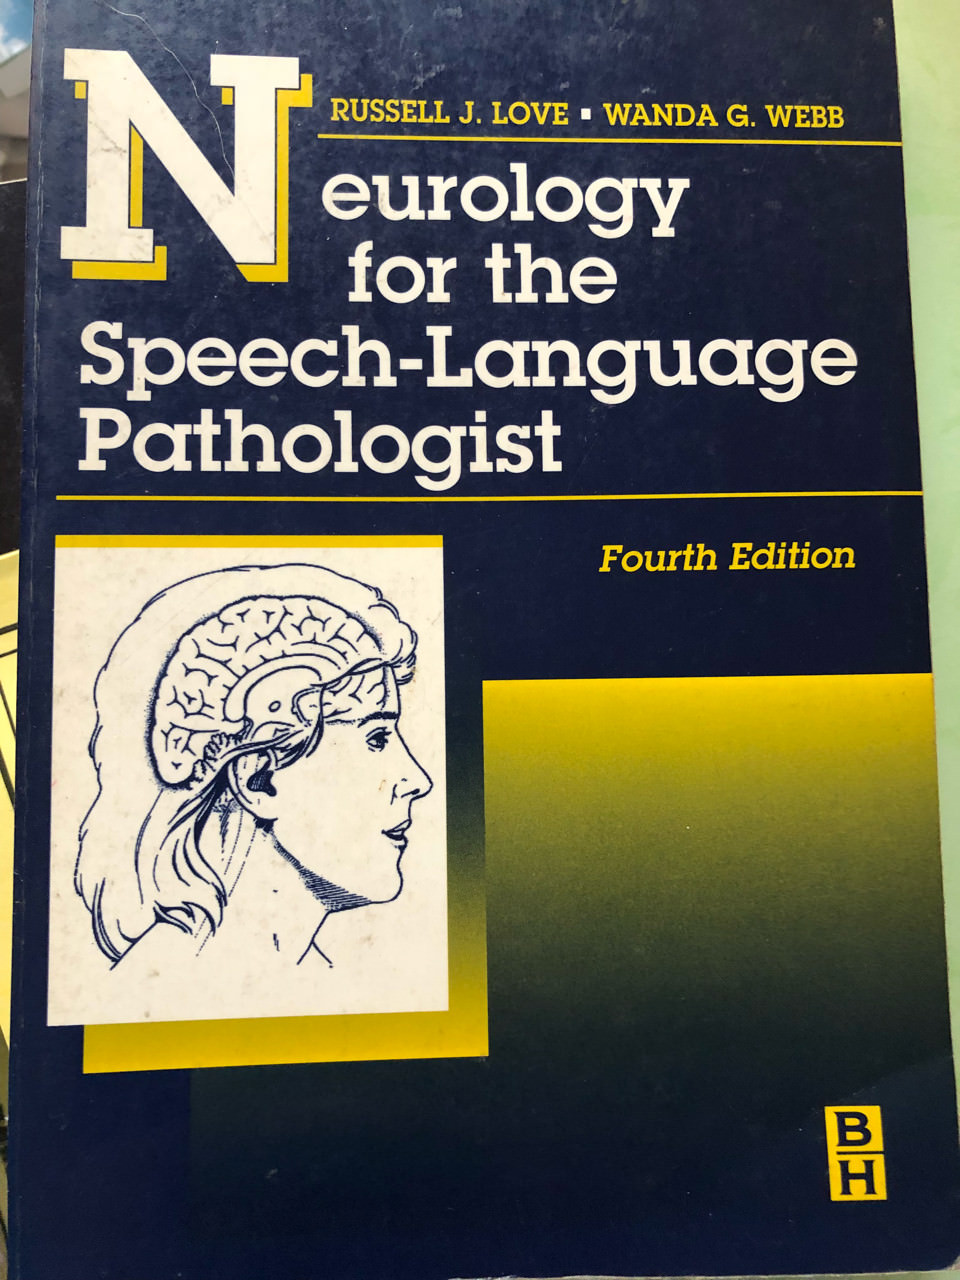 neurology for the speech-language pathologist 6th edition pdf